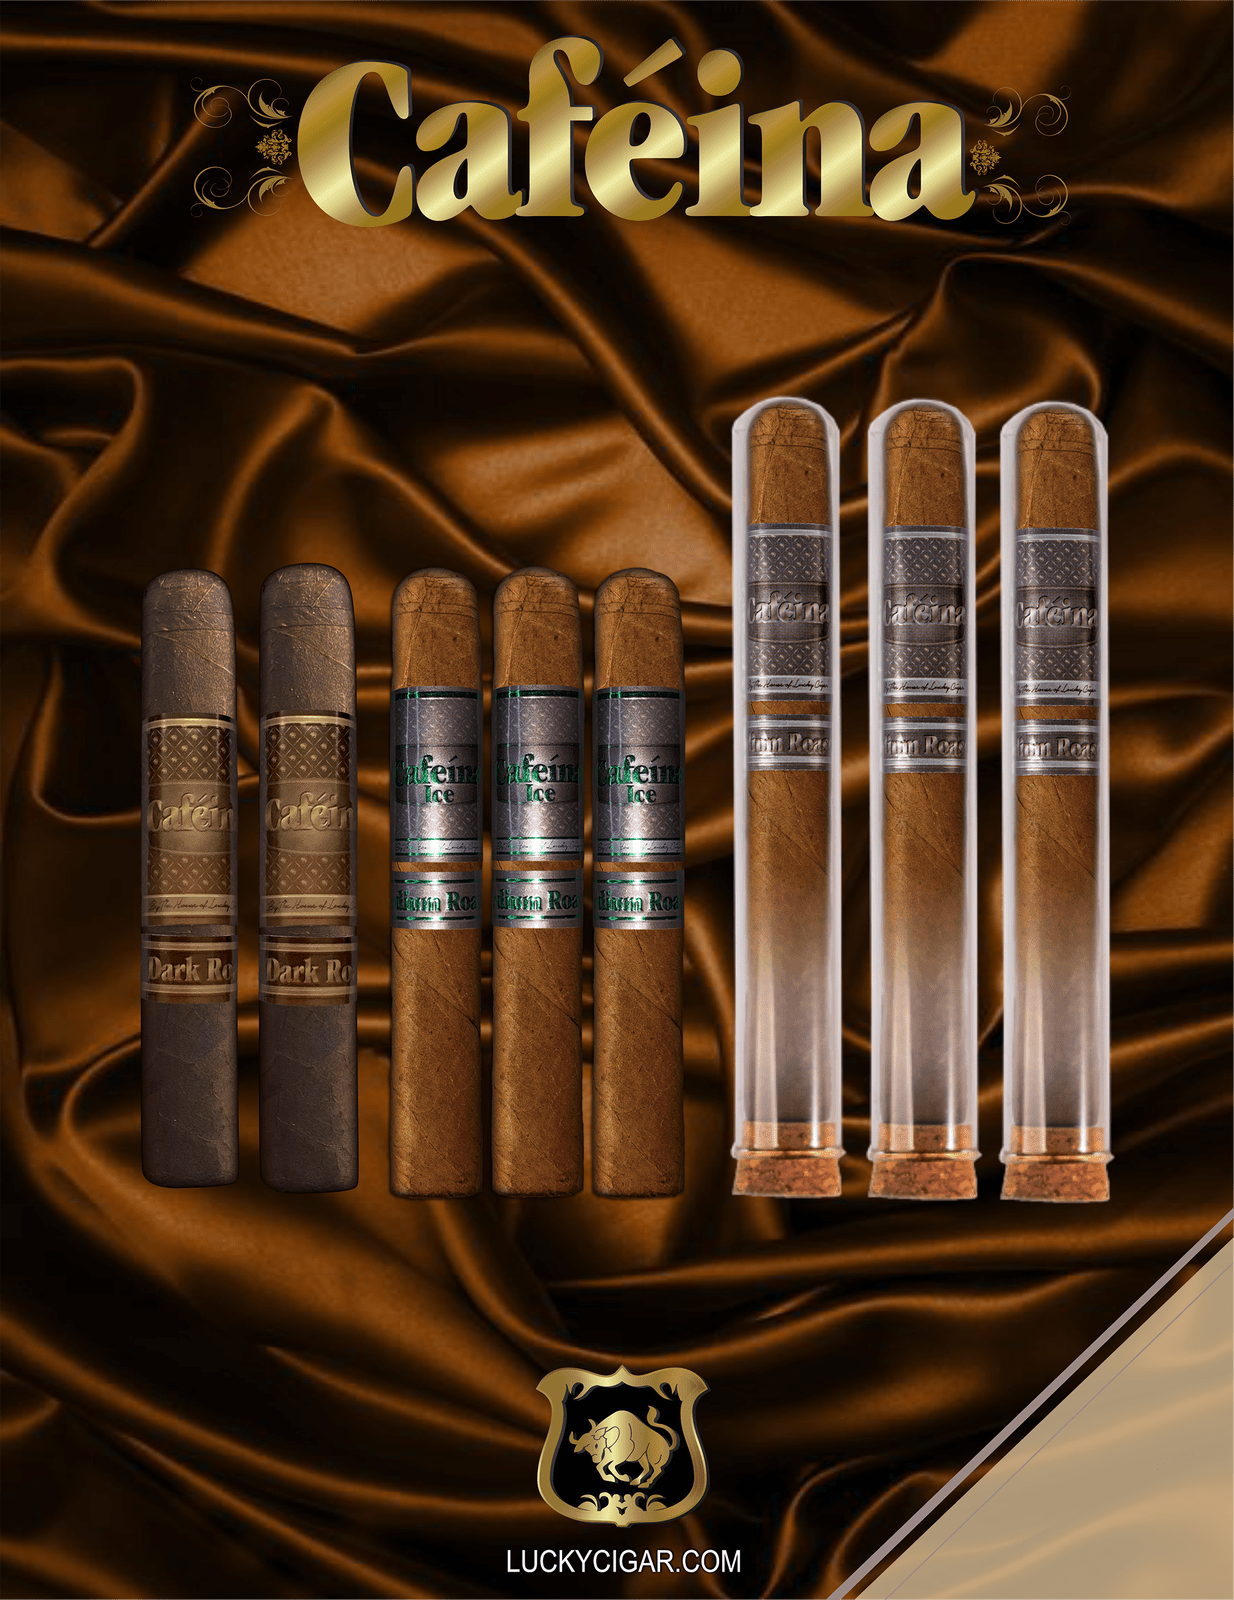 Infused Cigars: Set of 8 Cafeina Roast Cigars - 2 Dark 5x58, 3 Medium 5x58, 3 Medium in Crystal 6x50